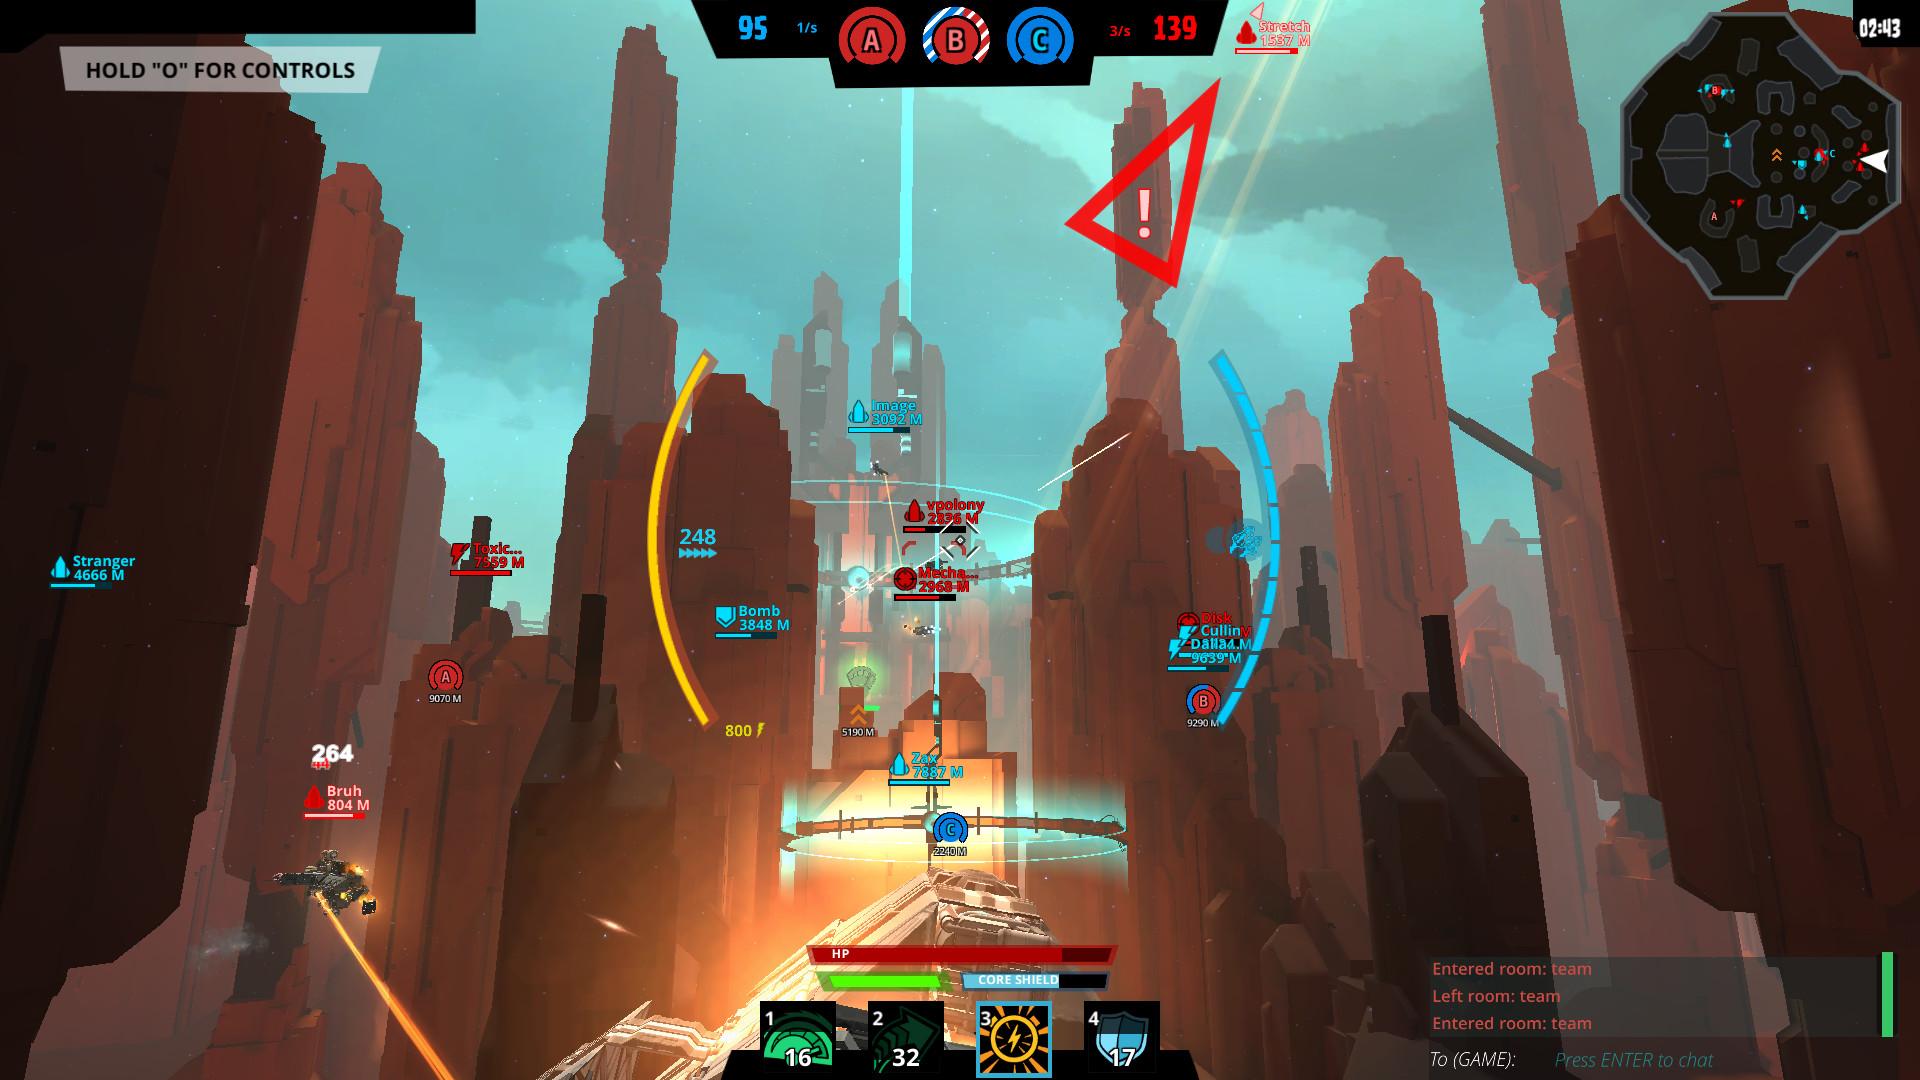 Screenshot №6 from game Galactic Junk League